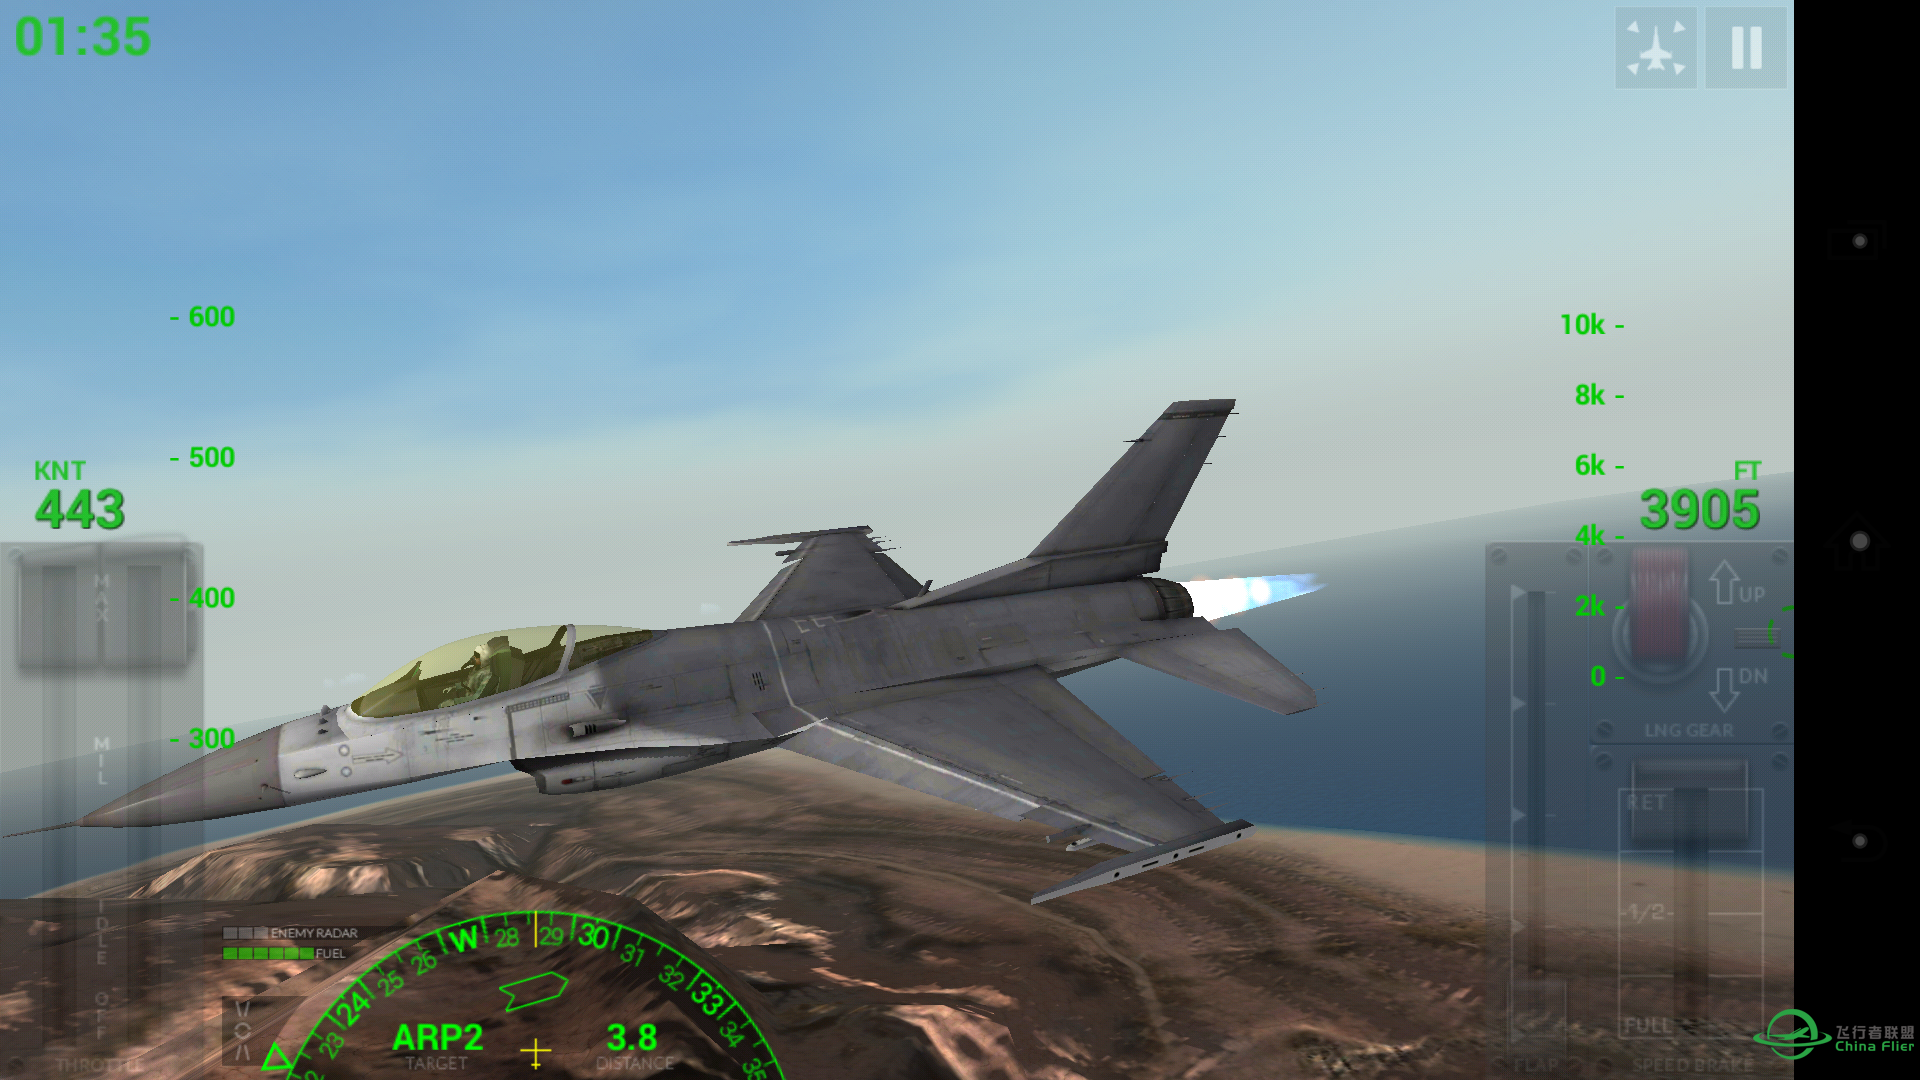 [截图而已]F18 Carrier Landing2 Pro-7116 